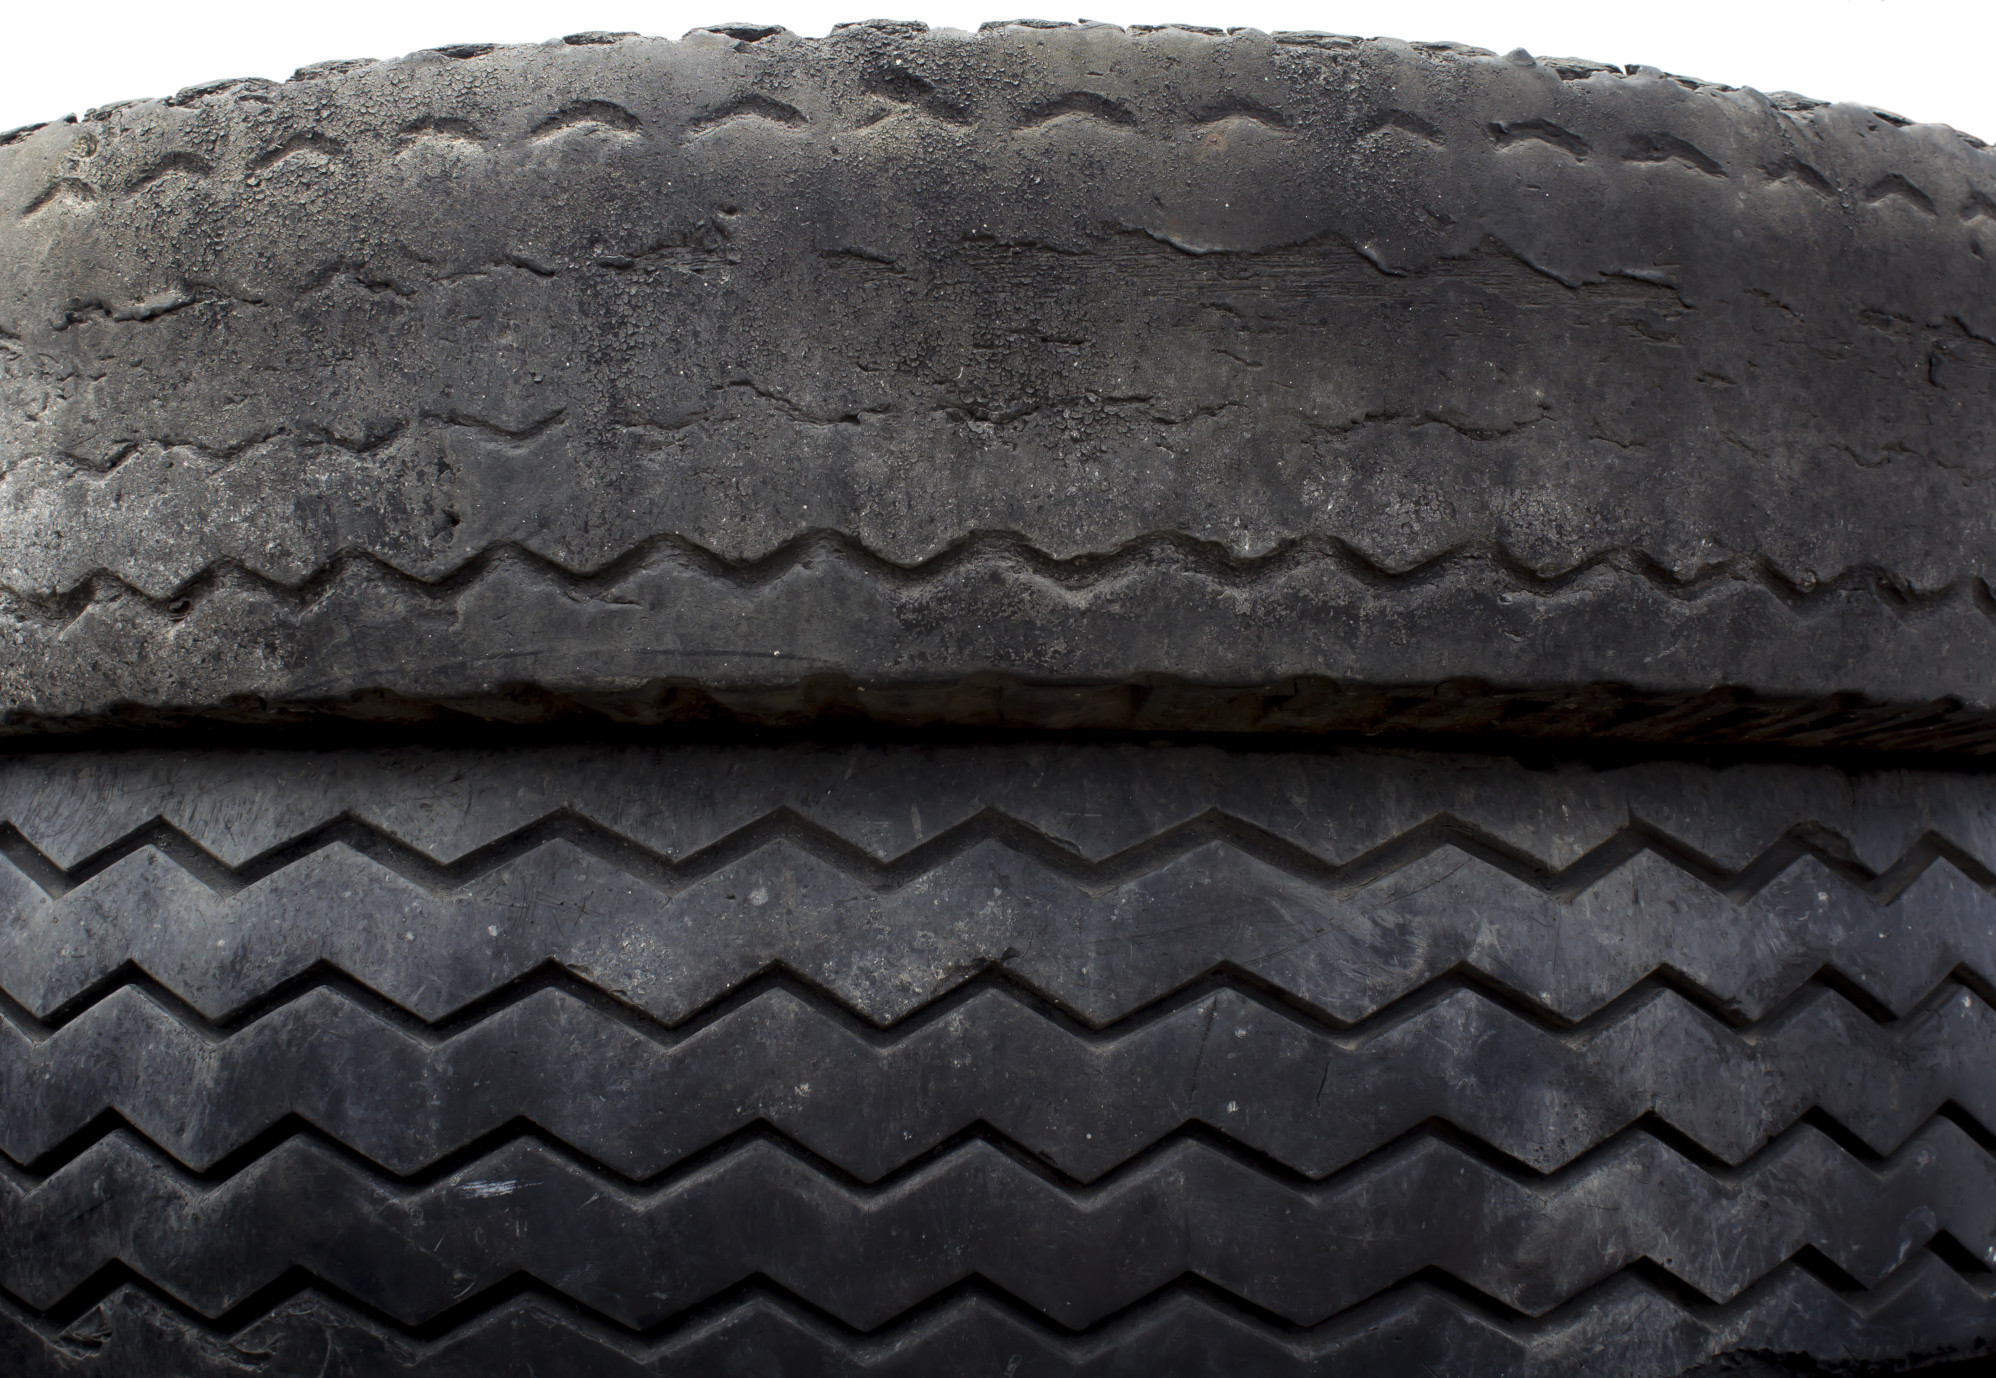 Worn Tire vs New Tire